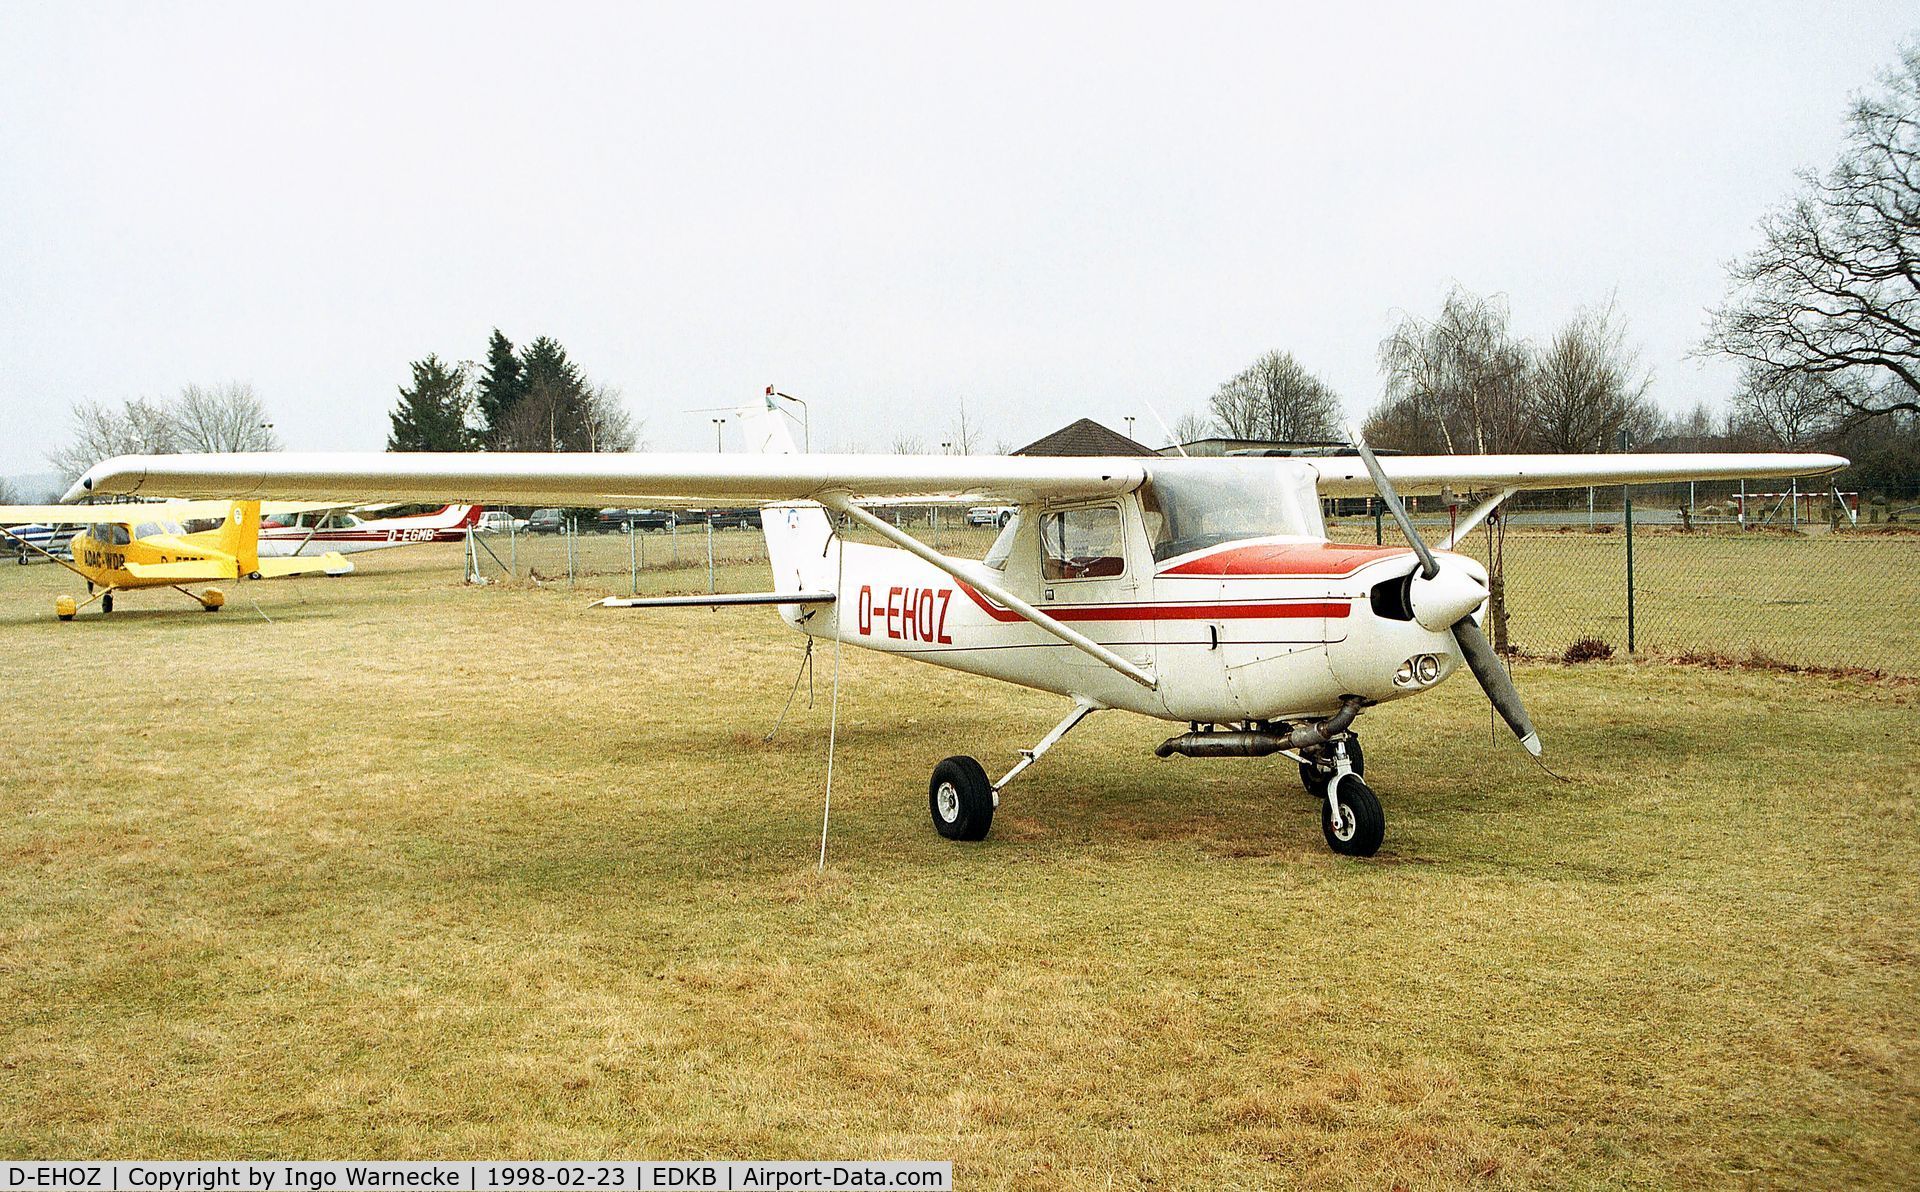 D-EHOZ, Reims F152 C/N 1636, Cessna (Reims) F152 at Bonn-Hangelar airfield